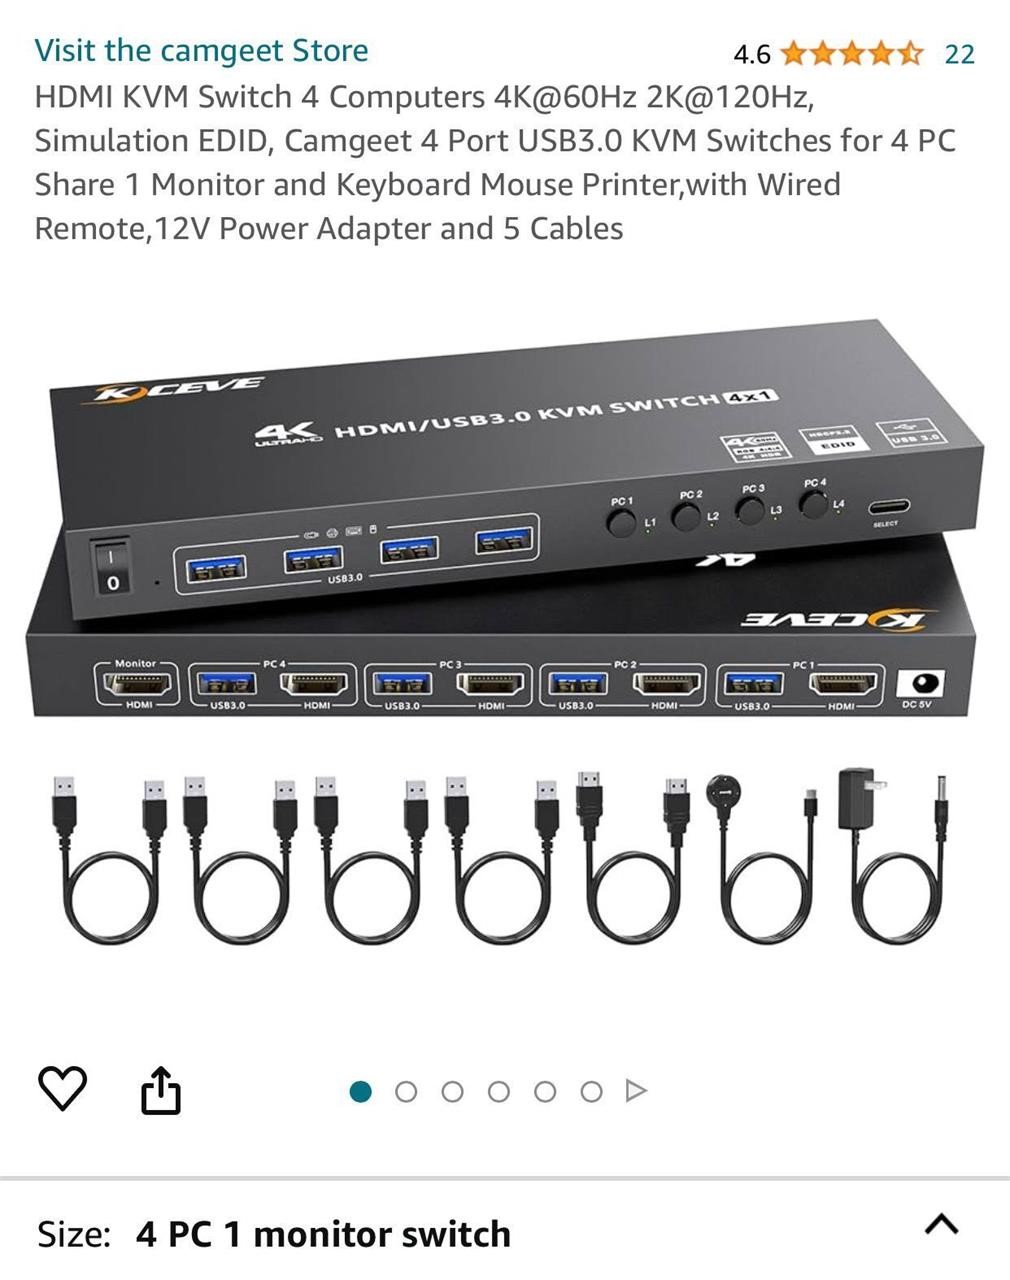 HDMI KVM Switch 4 Computers